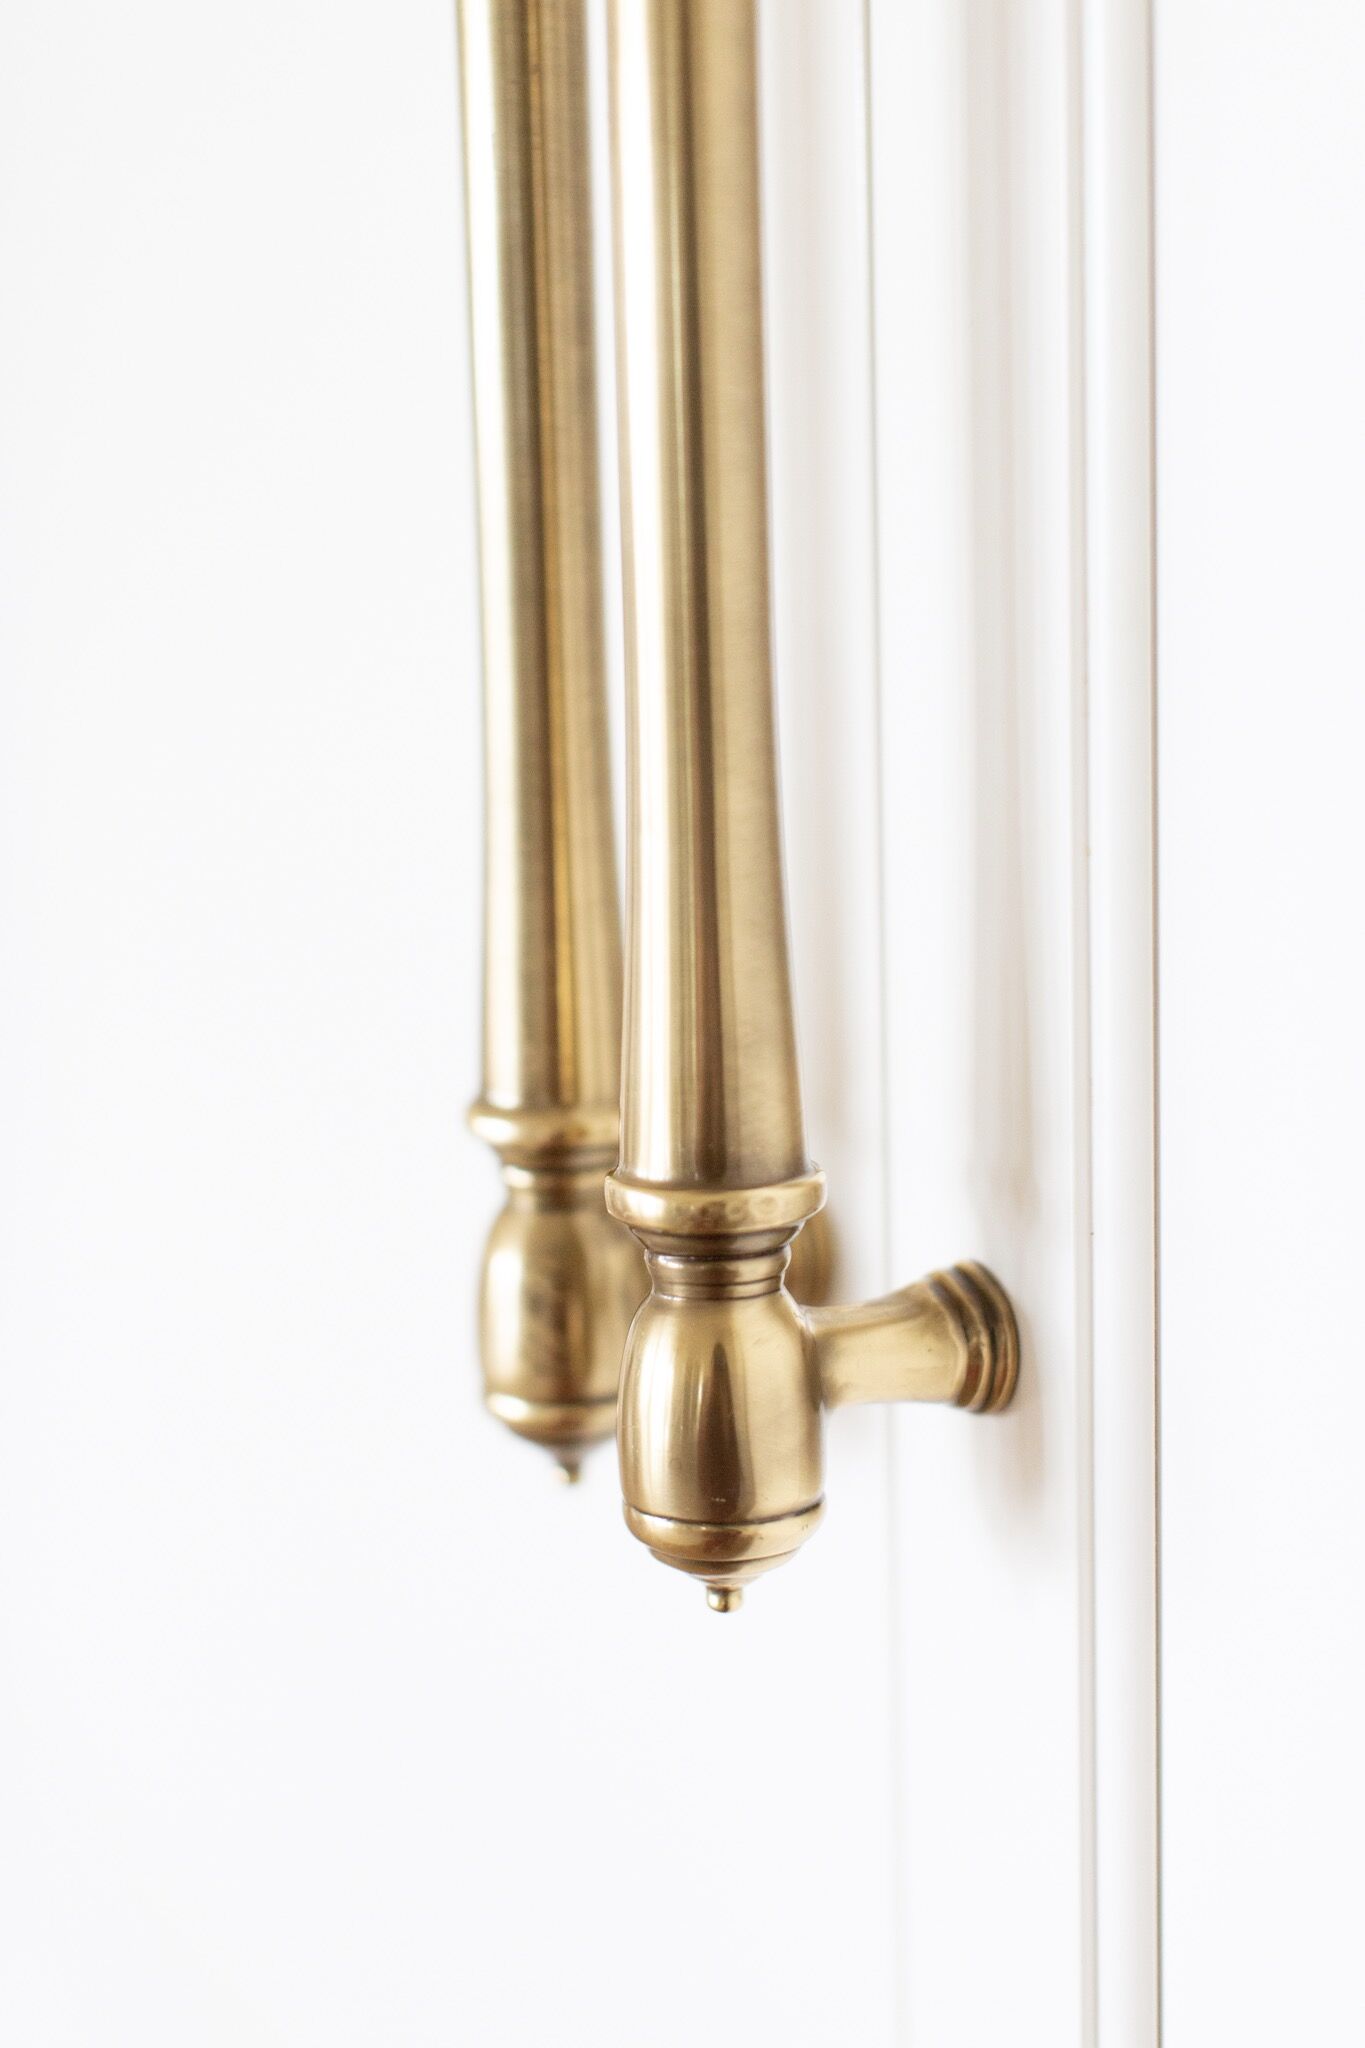 Double Door Integrated Fridges with brass hardware